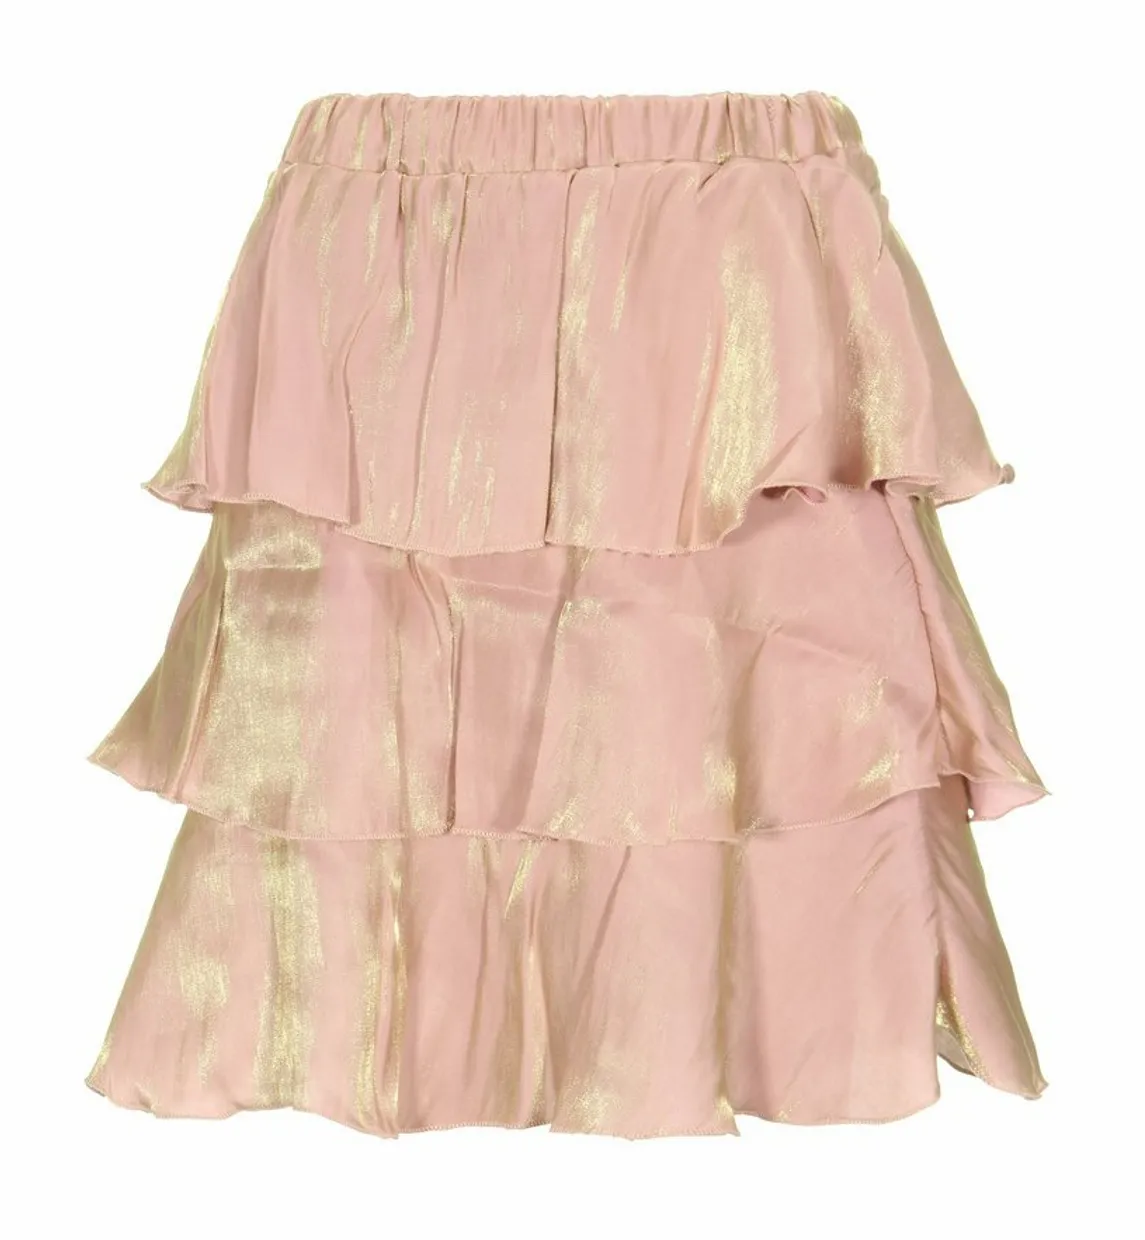 Shiny satin ruffle skirt pink